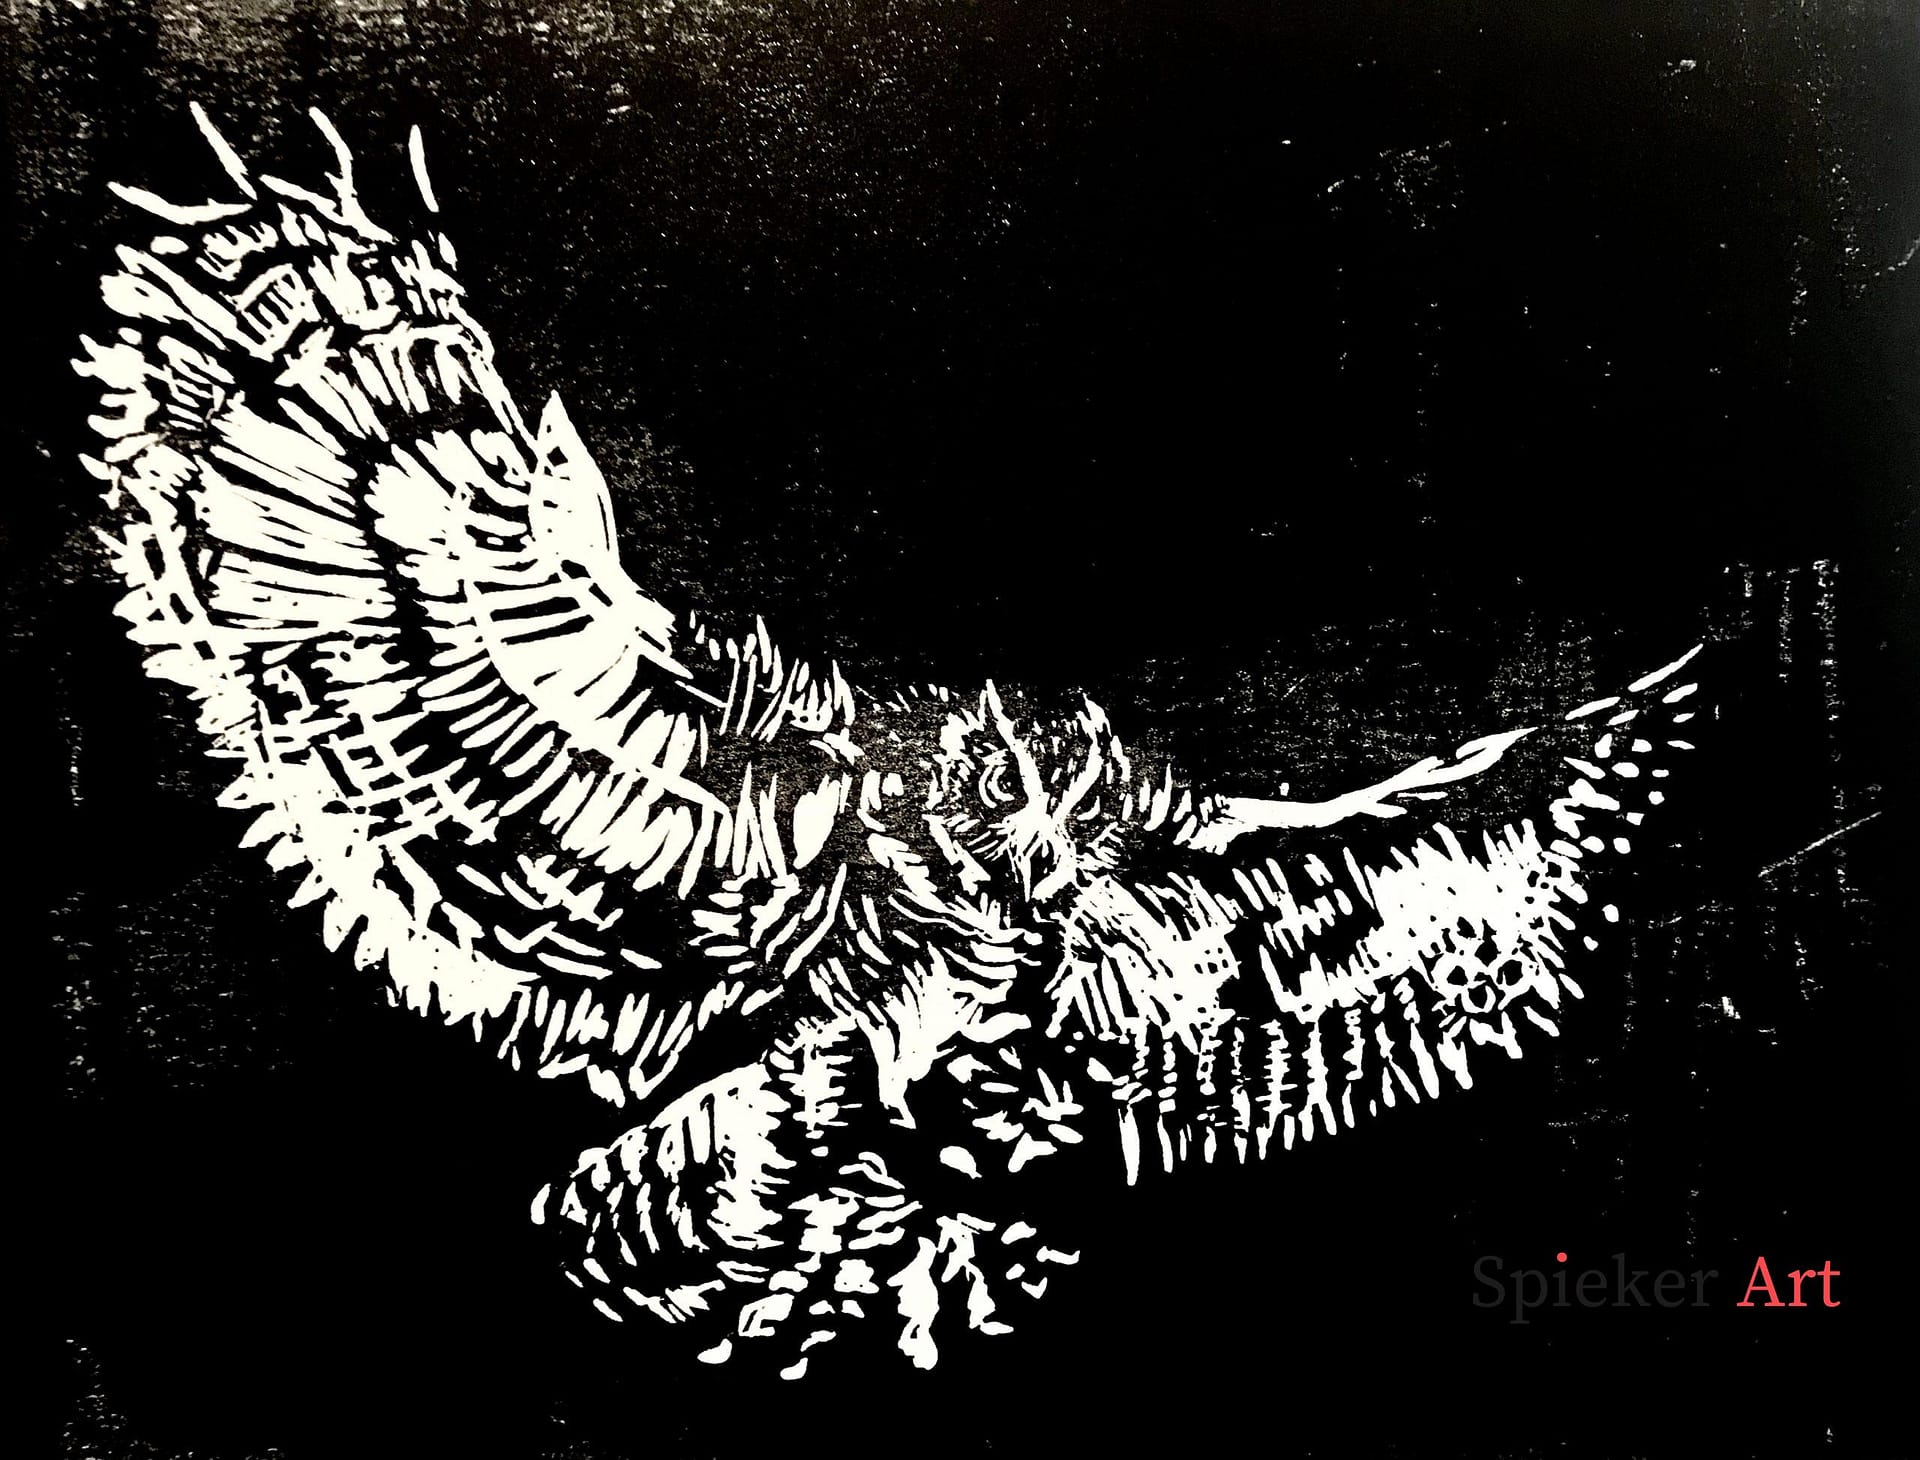 linocut of an owl swooping in